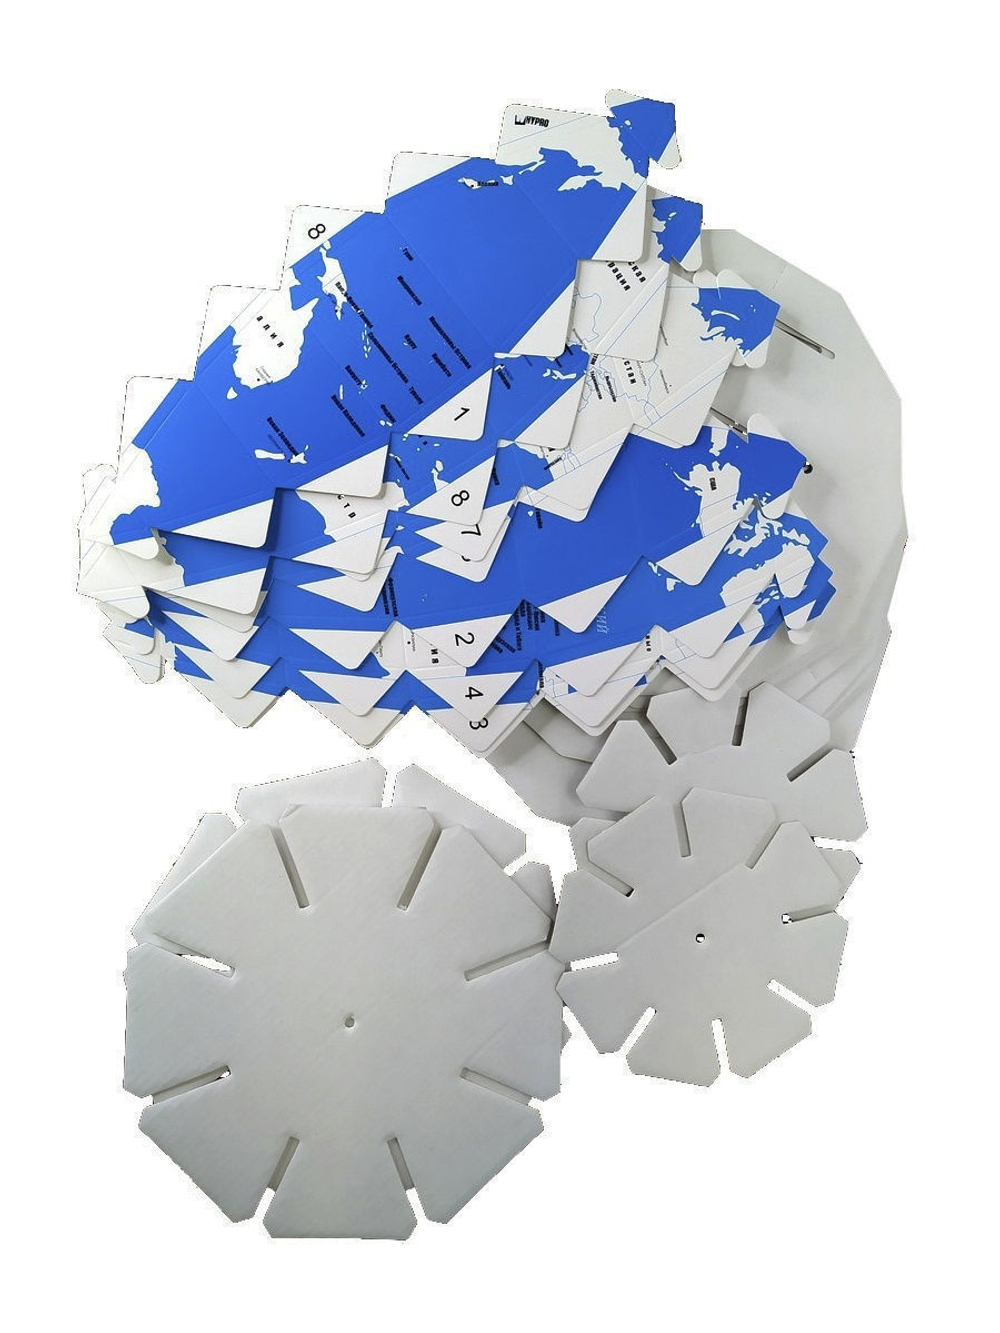 бумажный конструктор 3D пазл глобус раскраска Страны мира ТамТут голубой